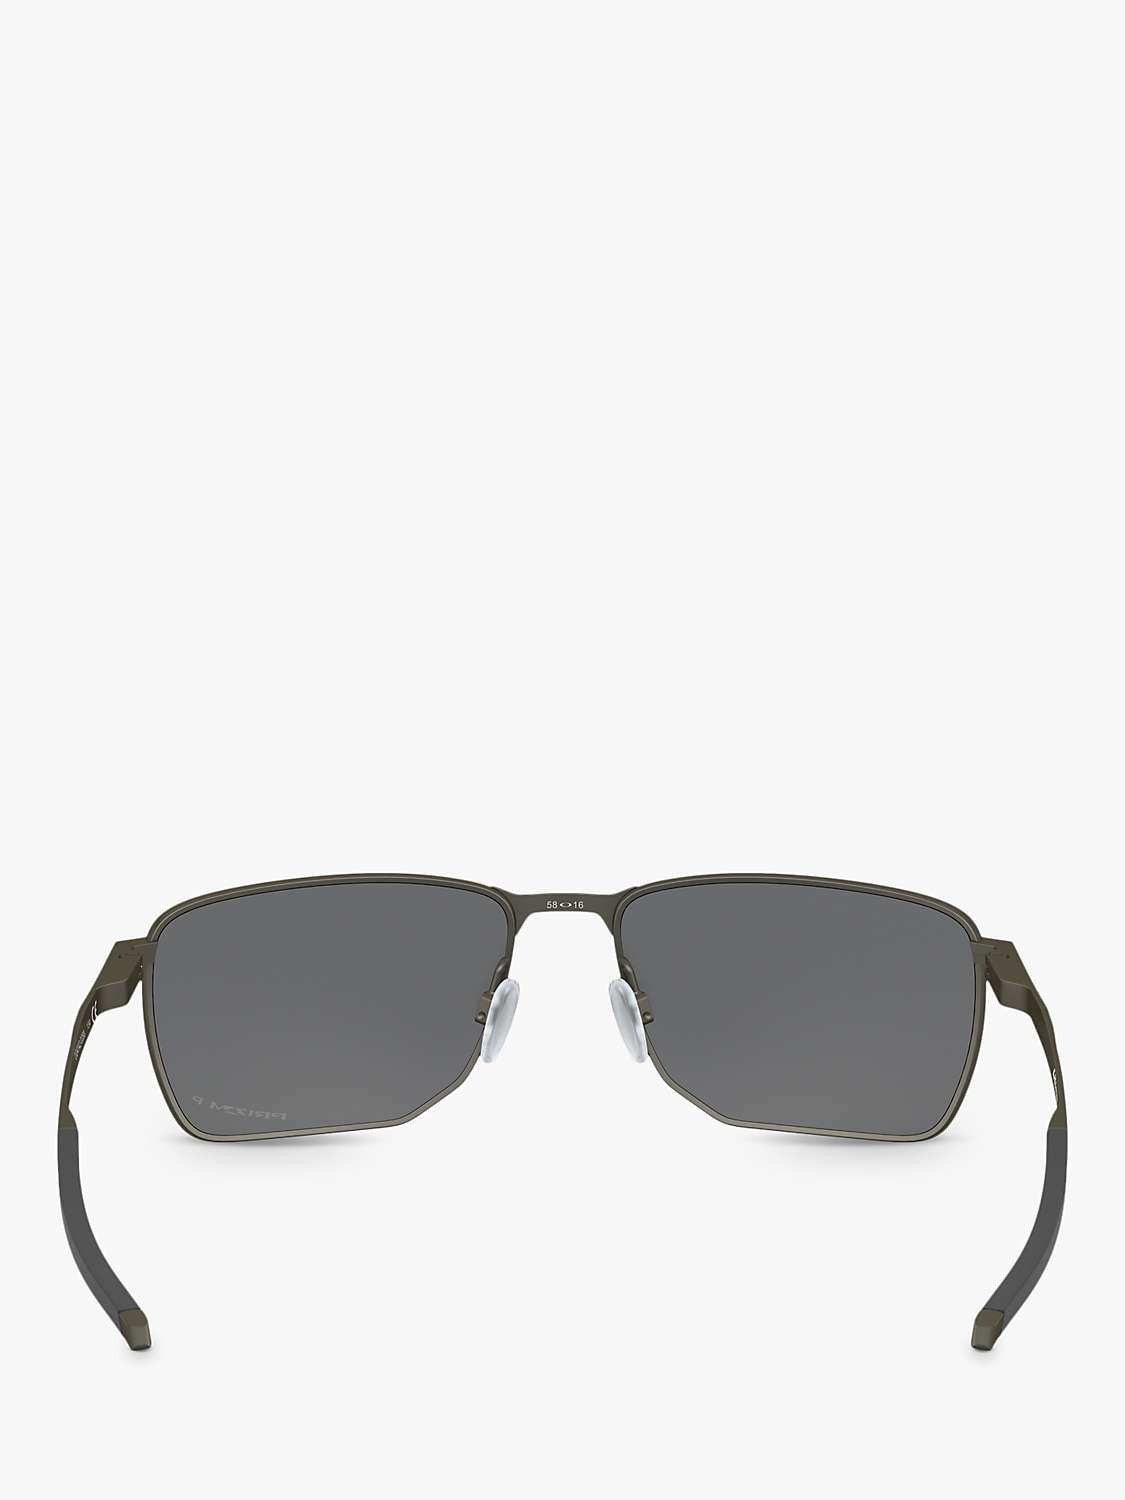 Buy Oakley OO4142 Men's Polarised Rectangular Sunglasses, Carbon Online at johnlewis.com